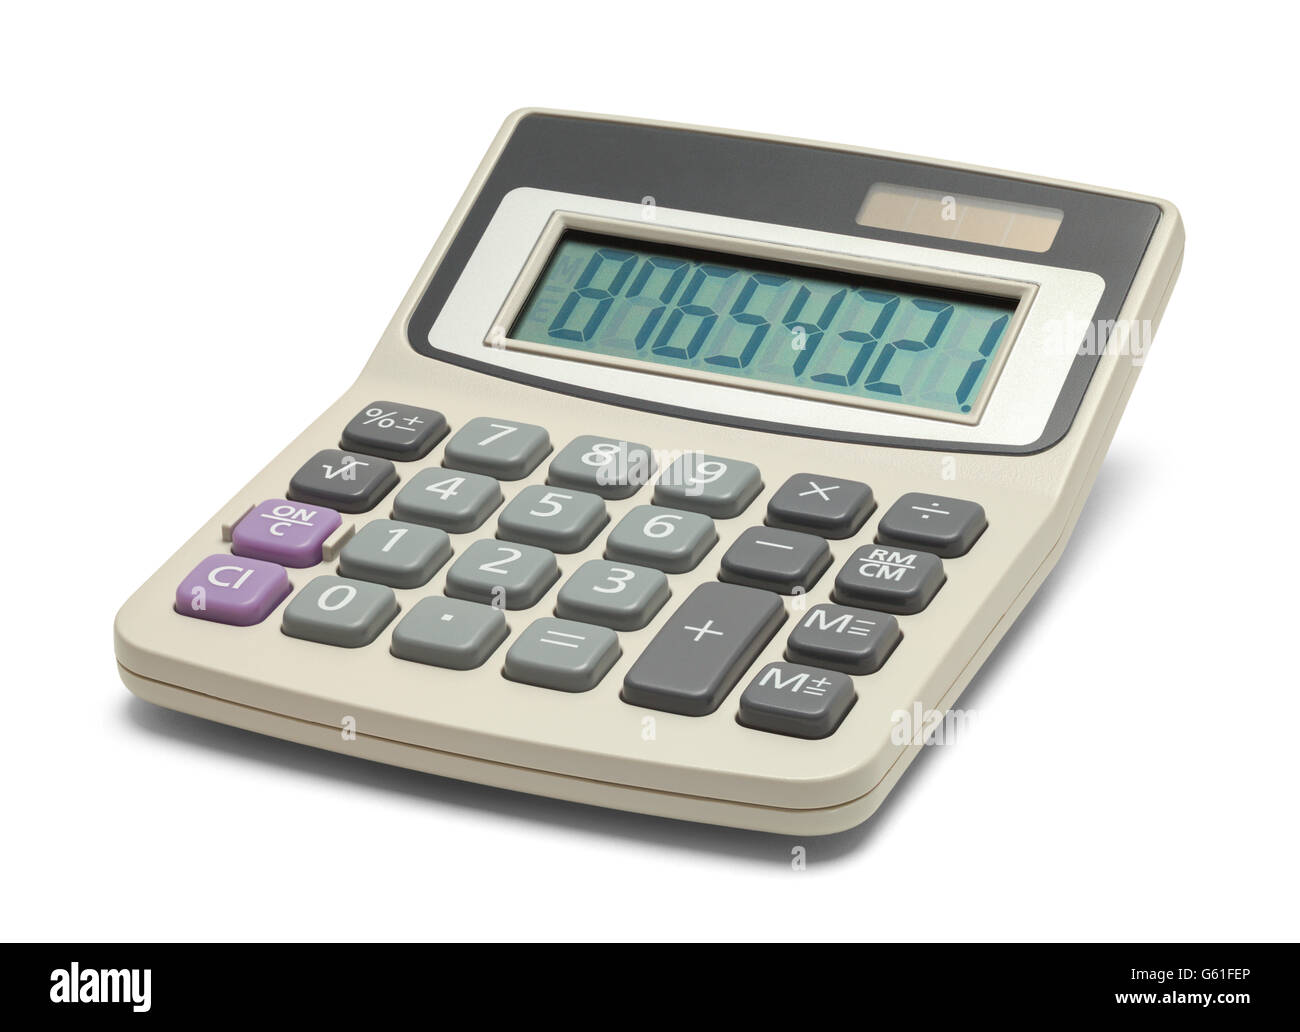 Calculadora de oficina de negocios aislado sobre fondo blanco. Foto de stock